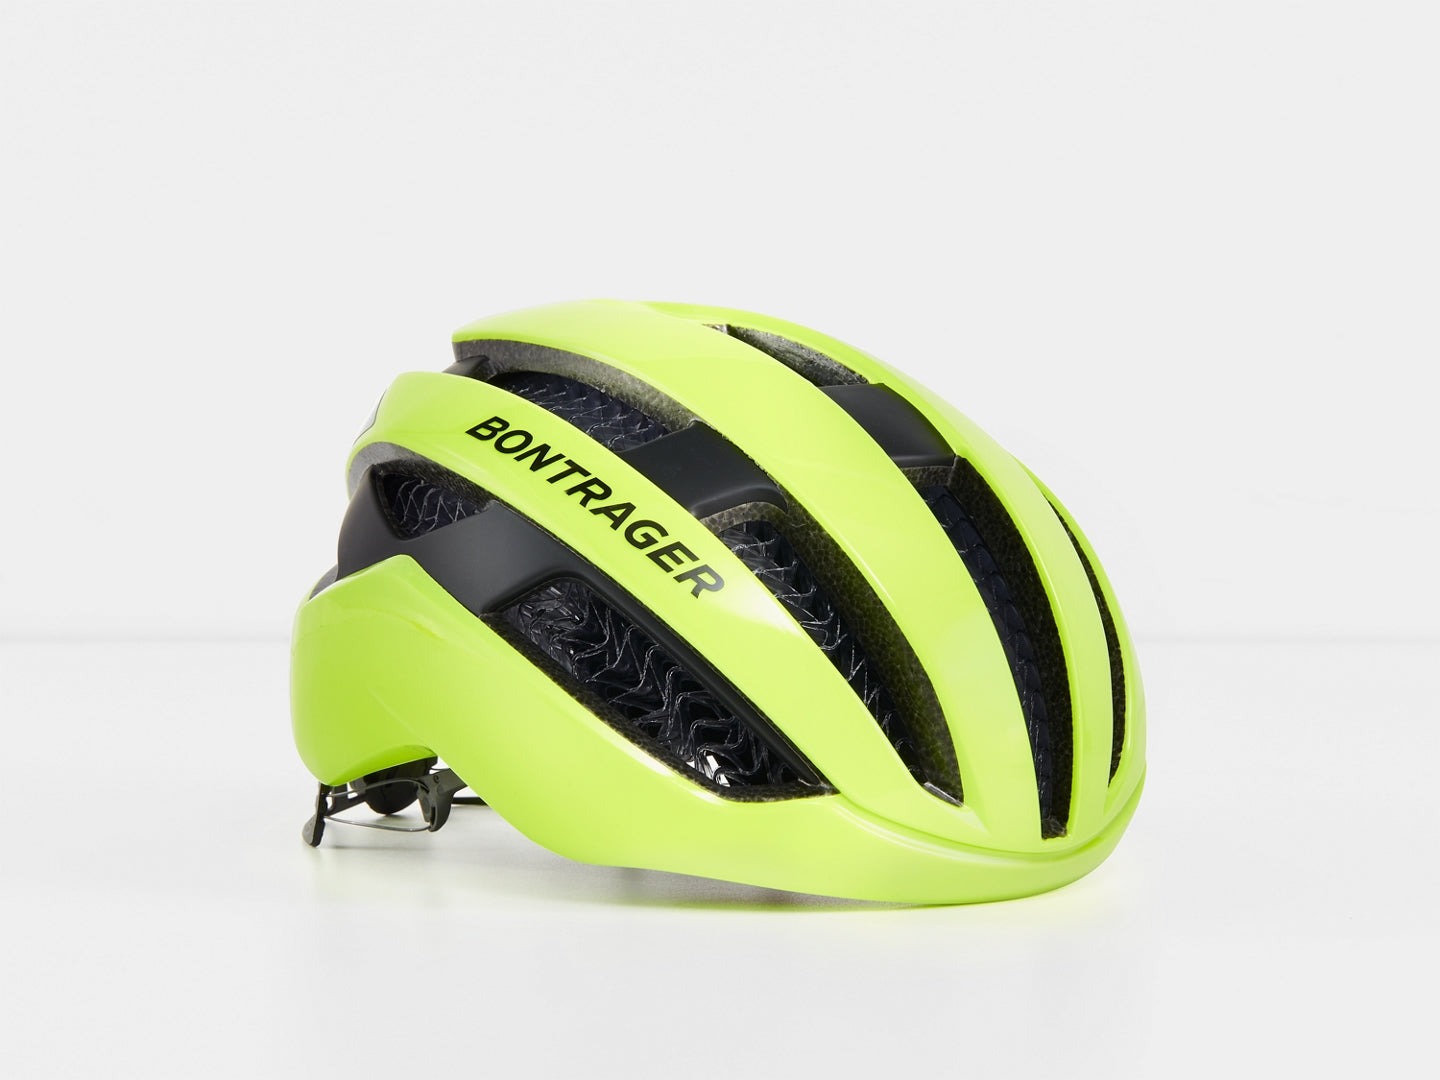 Bontrager Circuit WaveCel Road Bike Helmet- Bikes Helmet- Wavecel Technology- Boa Fit System- Recycled Material